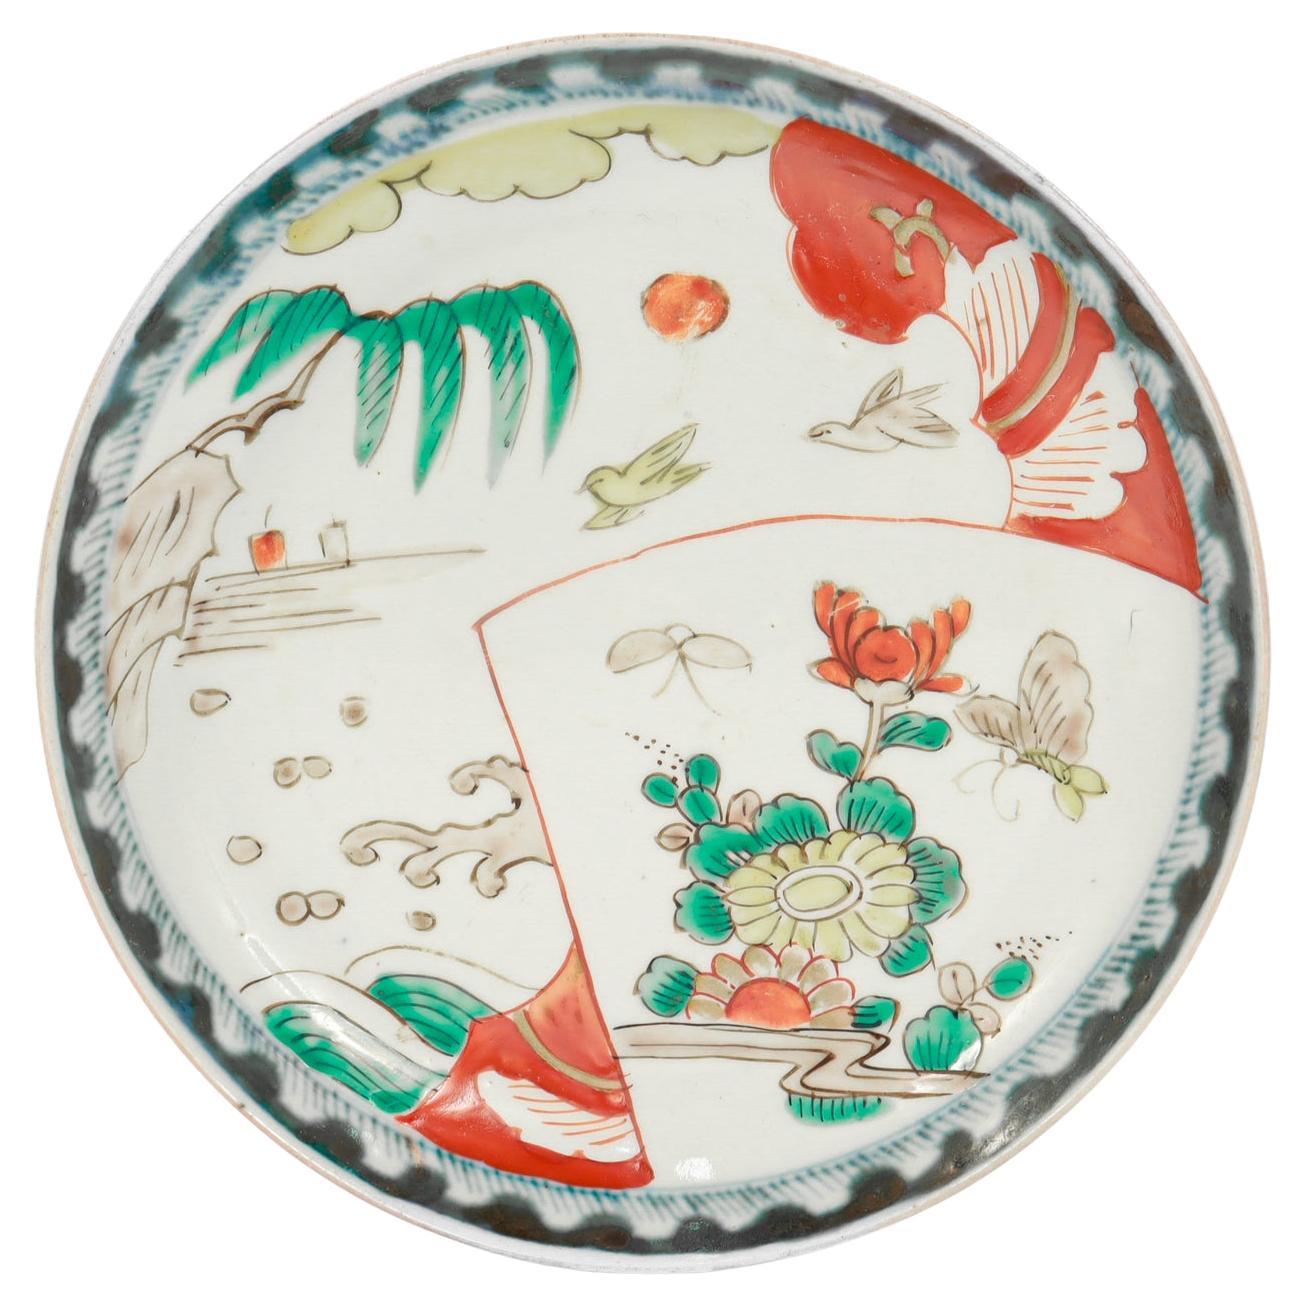 Antique Japanese Imari Porcelain Plate or Dish For Sale